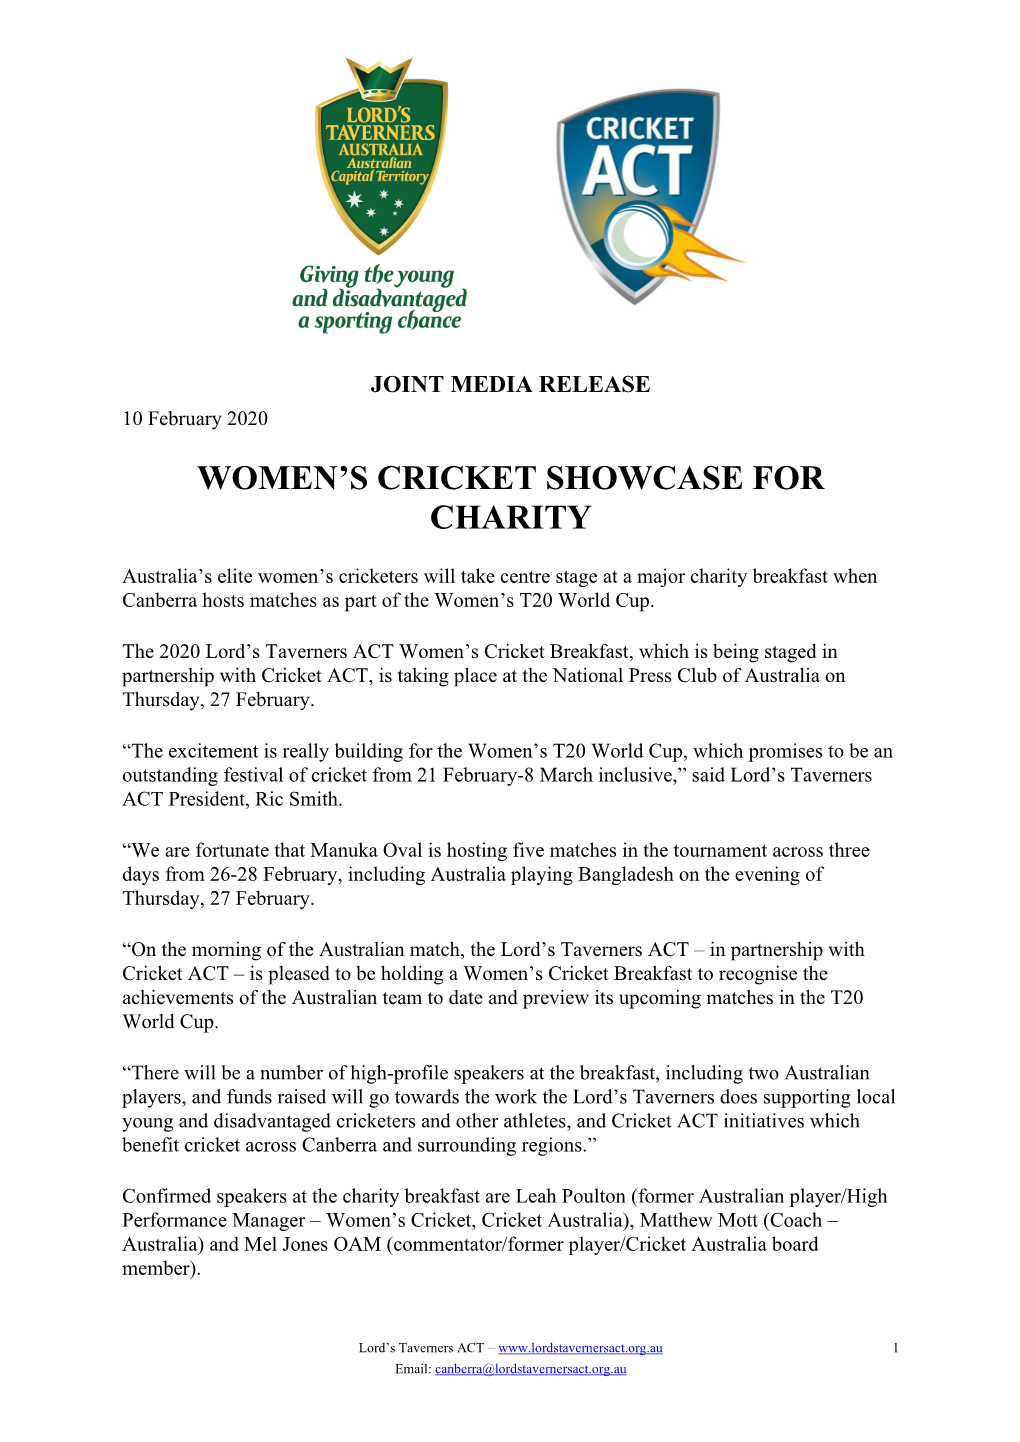 Women's Cricket Showcase for Charity